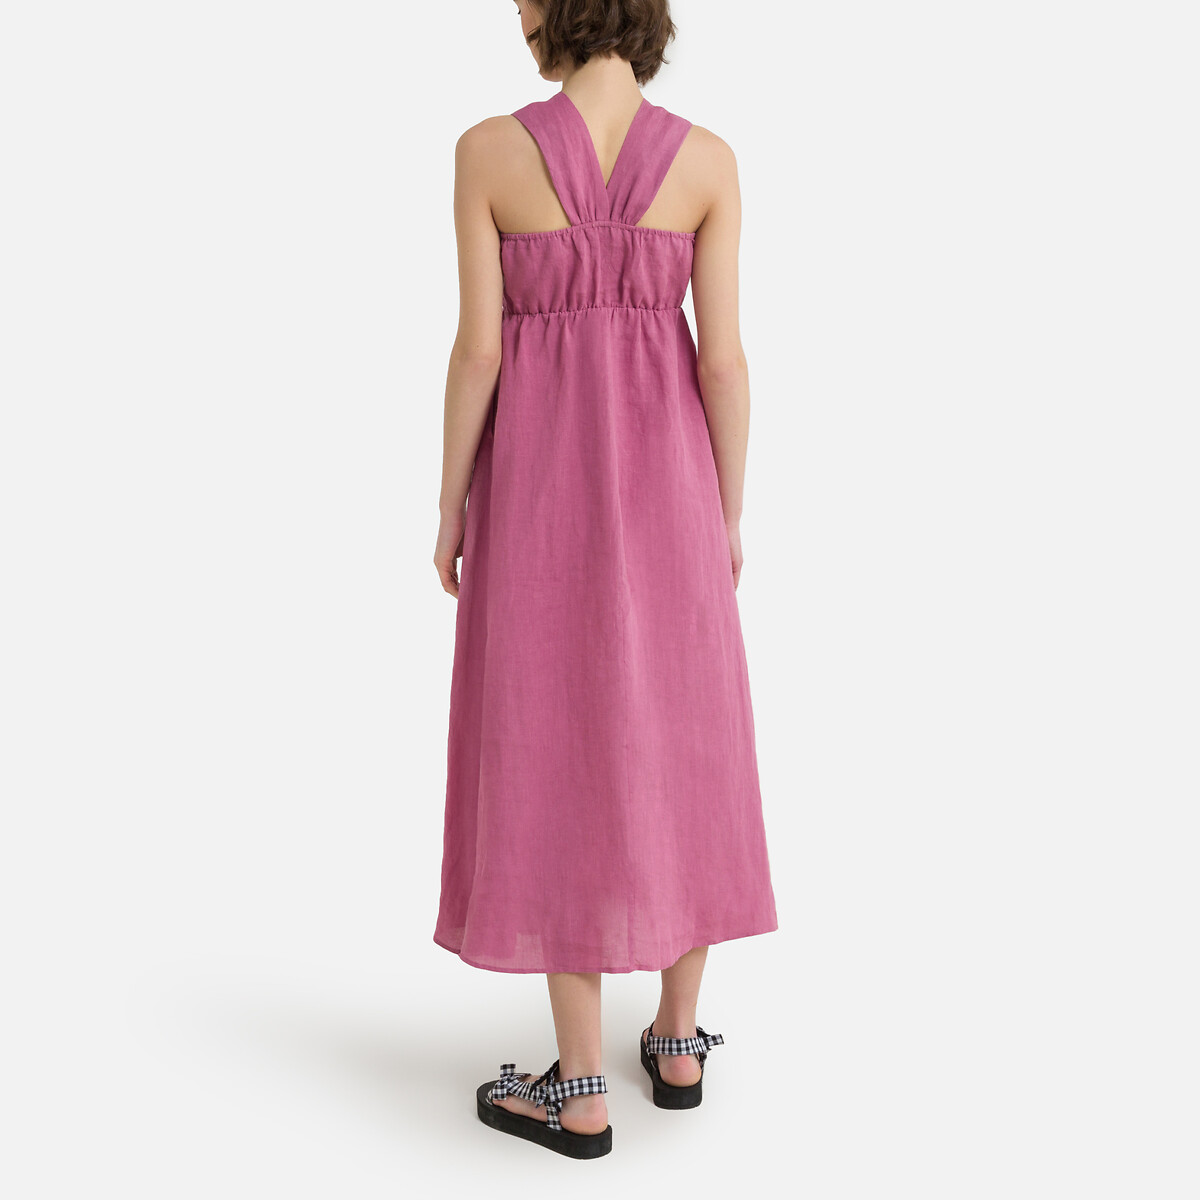 Платье SEE U SOON Длинное с бретельками-завязками 3(L) розовый, размер 3(L) Длинное с бретельками-завязками 3(L) розовый - фото 4